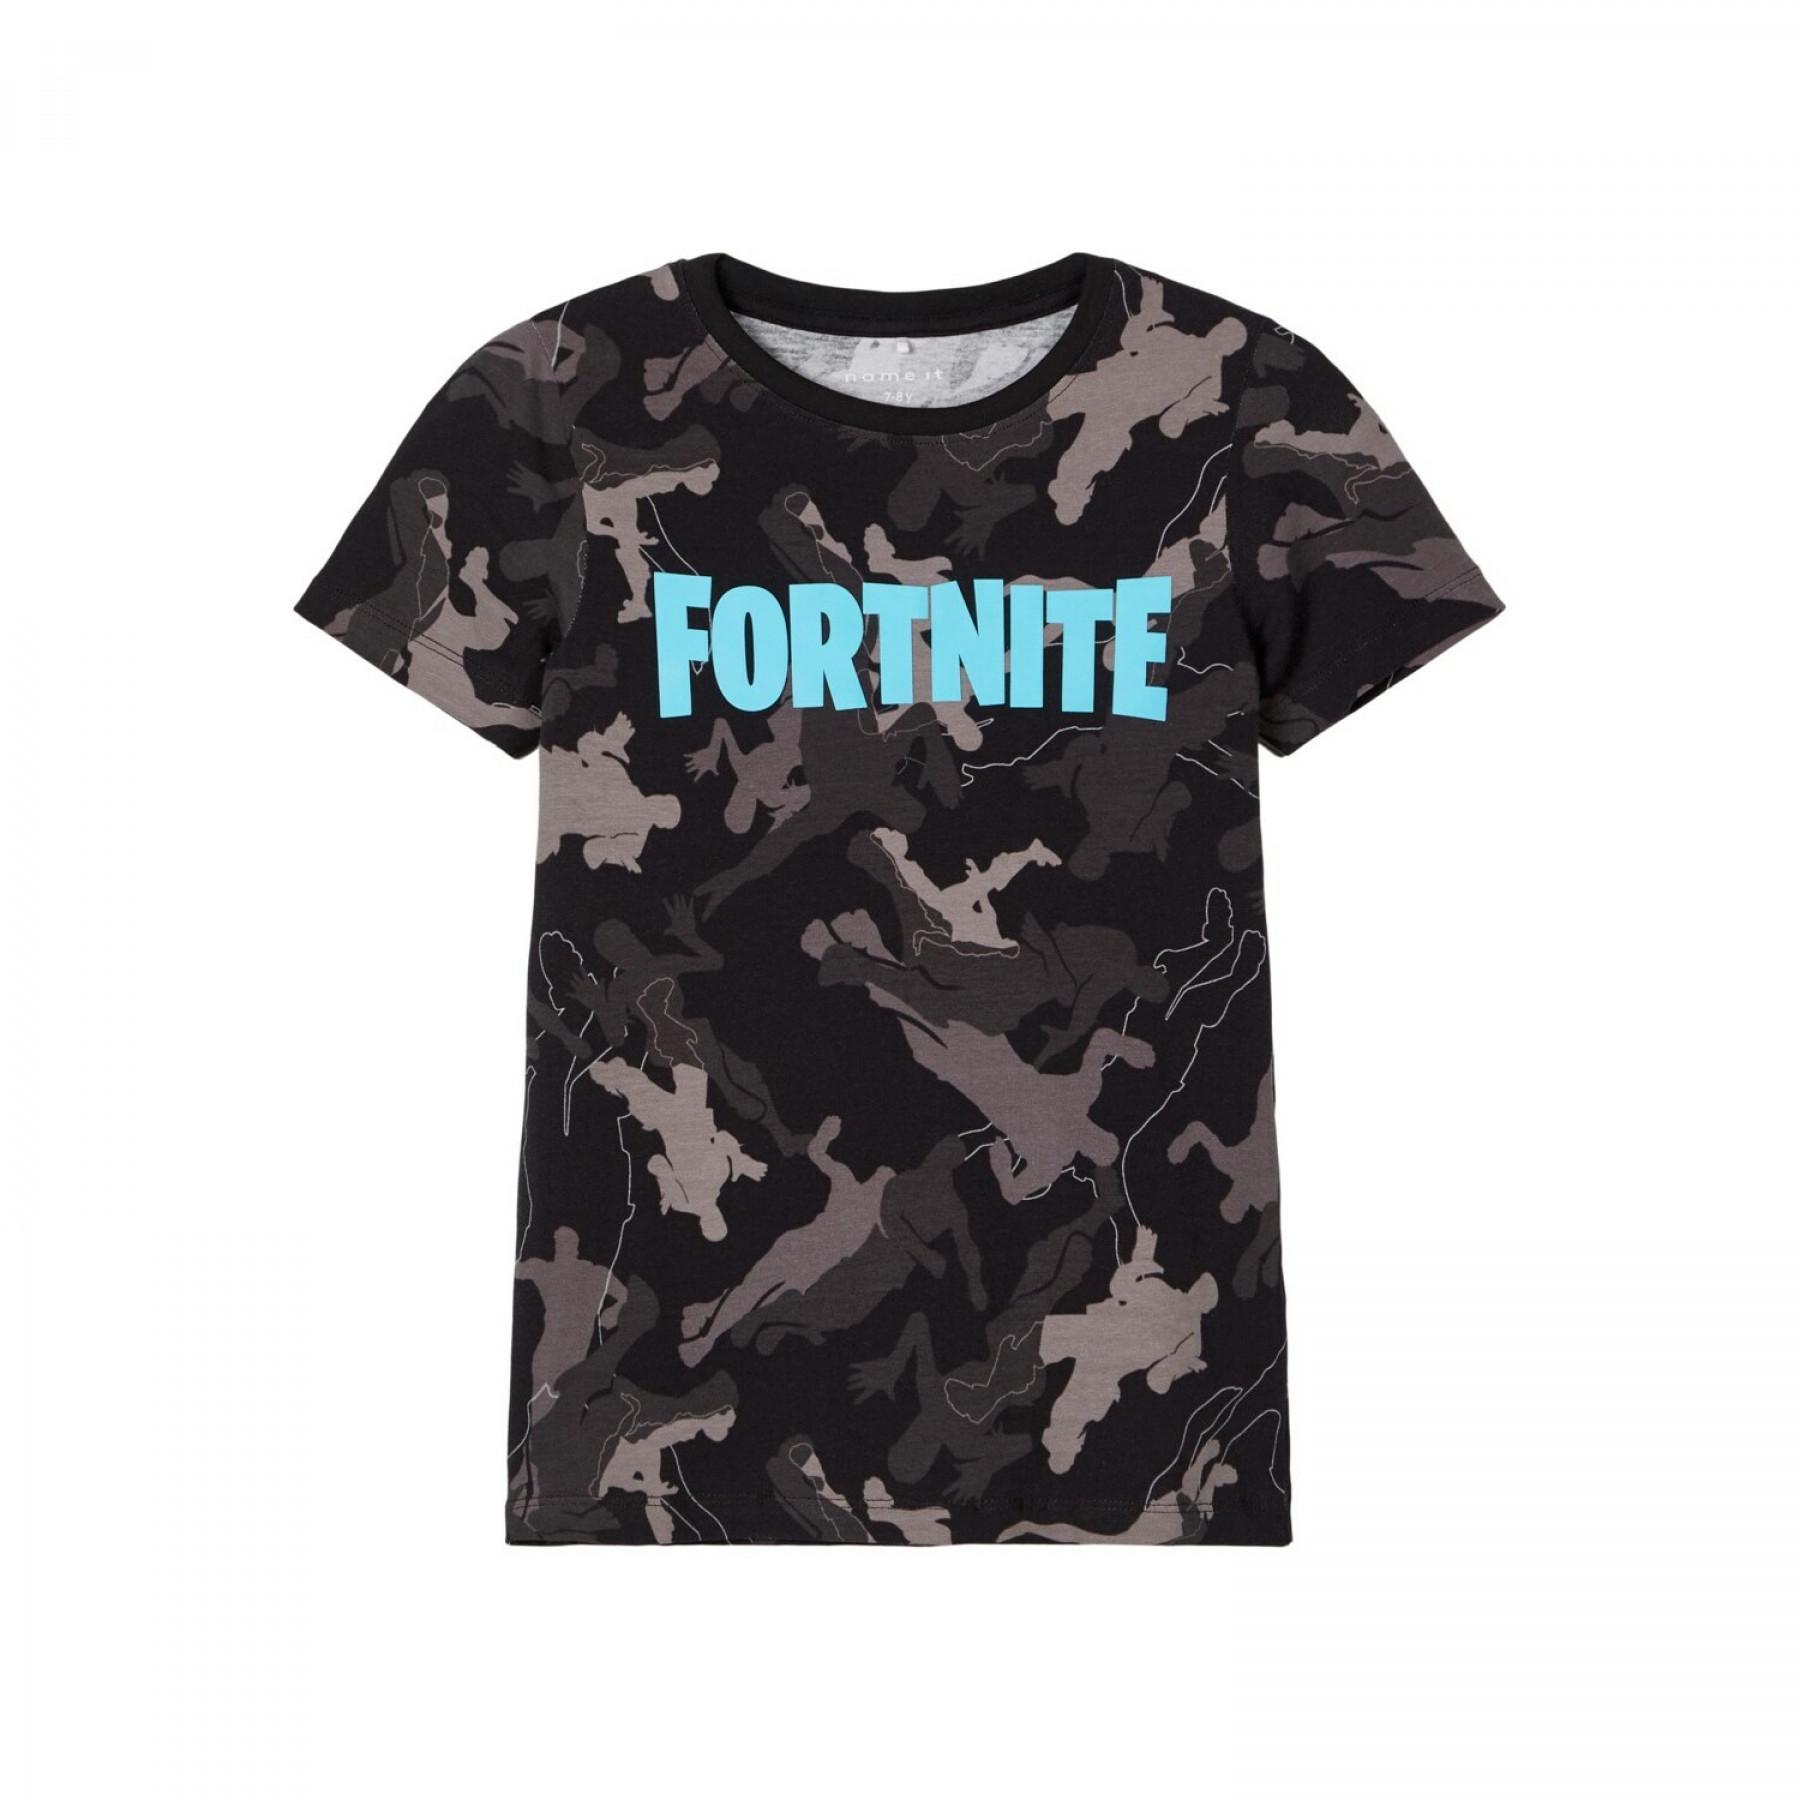 Camiseta niño Name it Fortnite